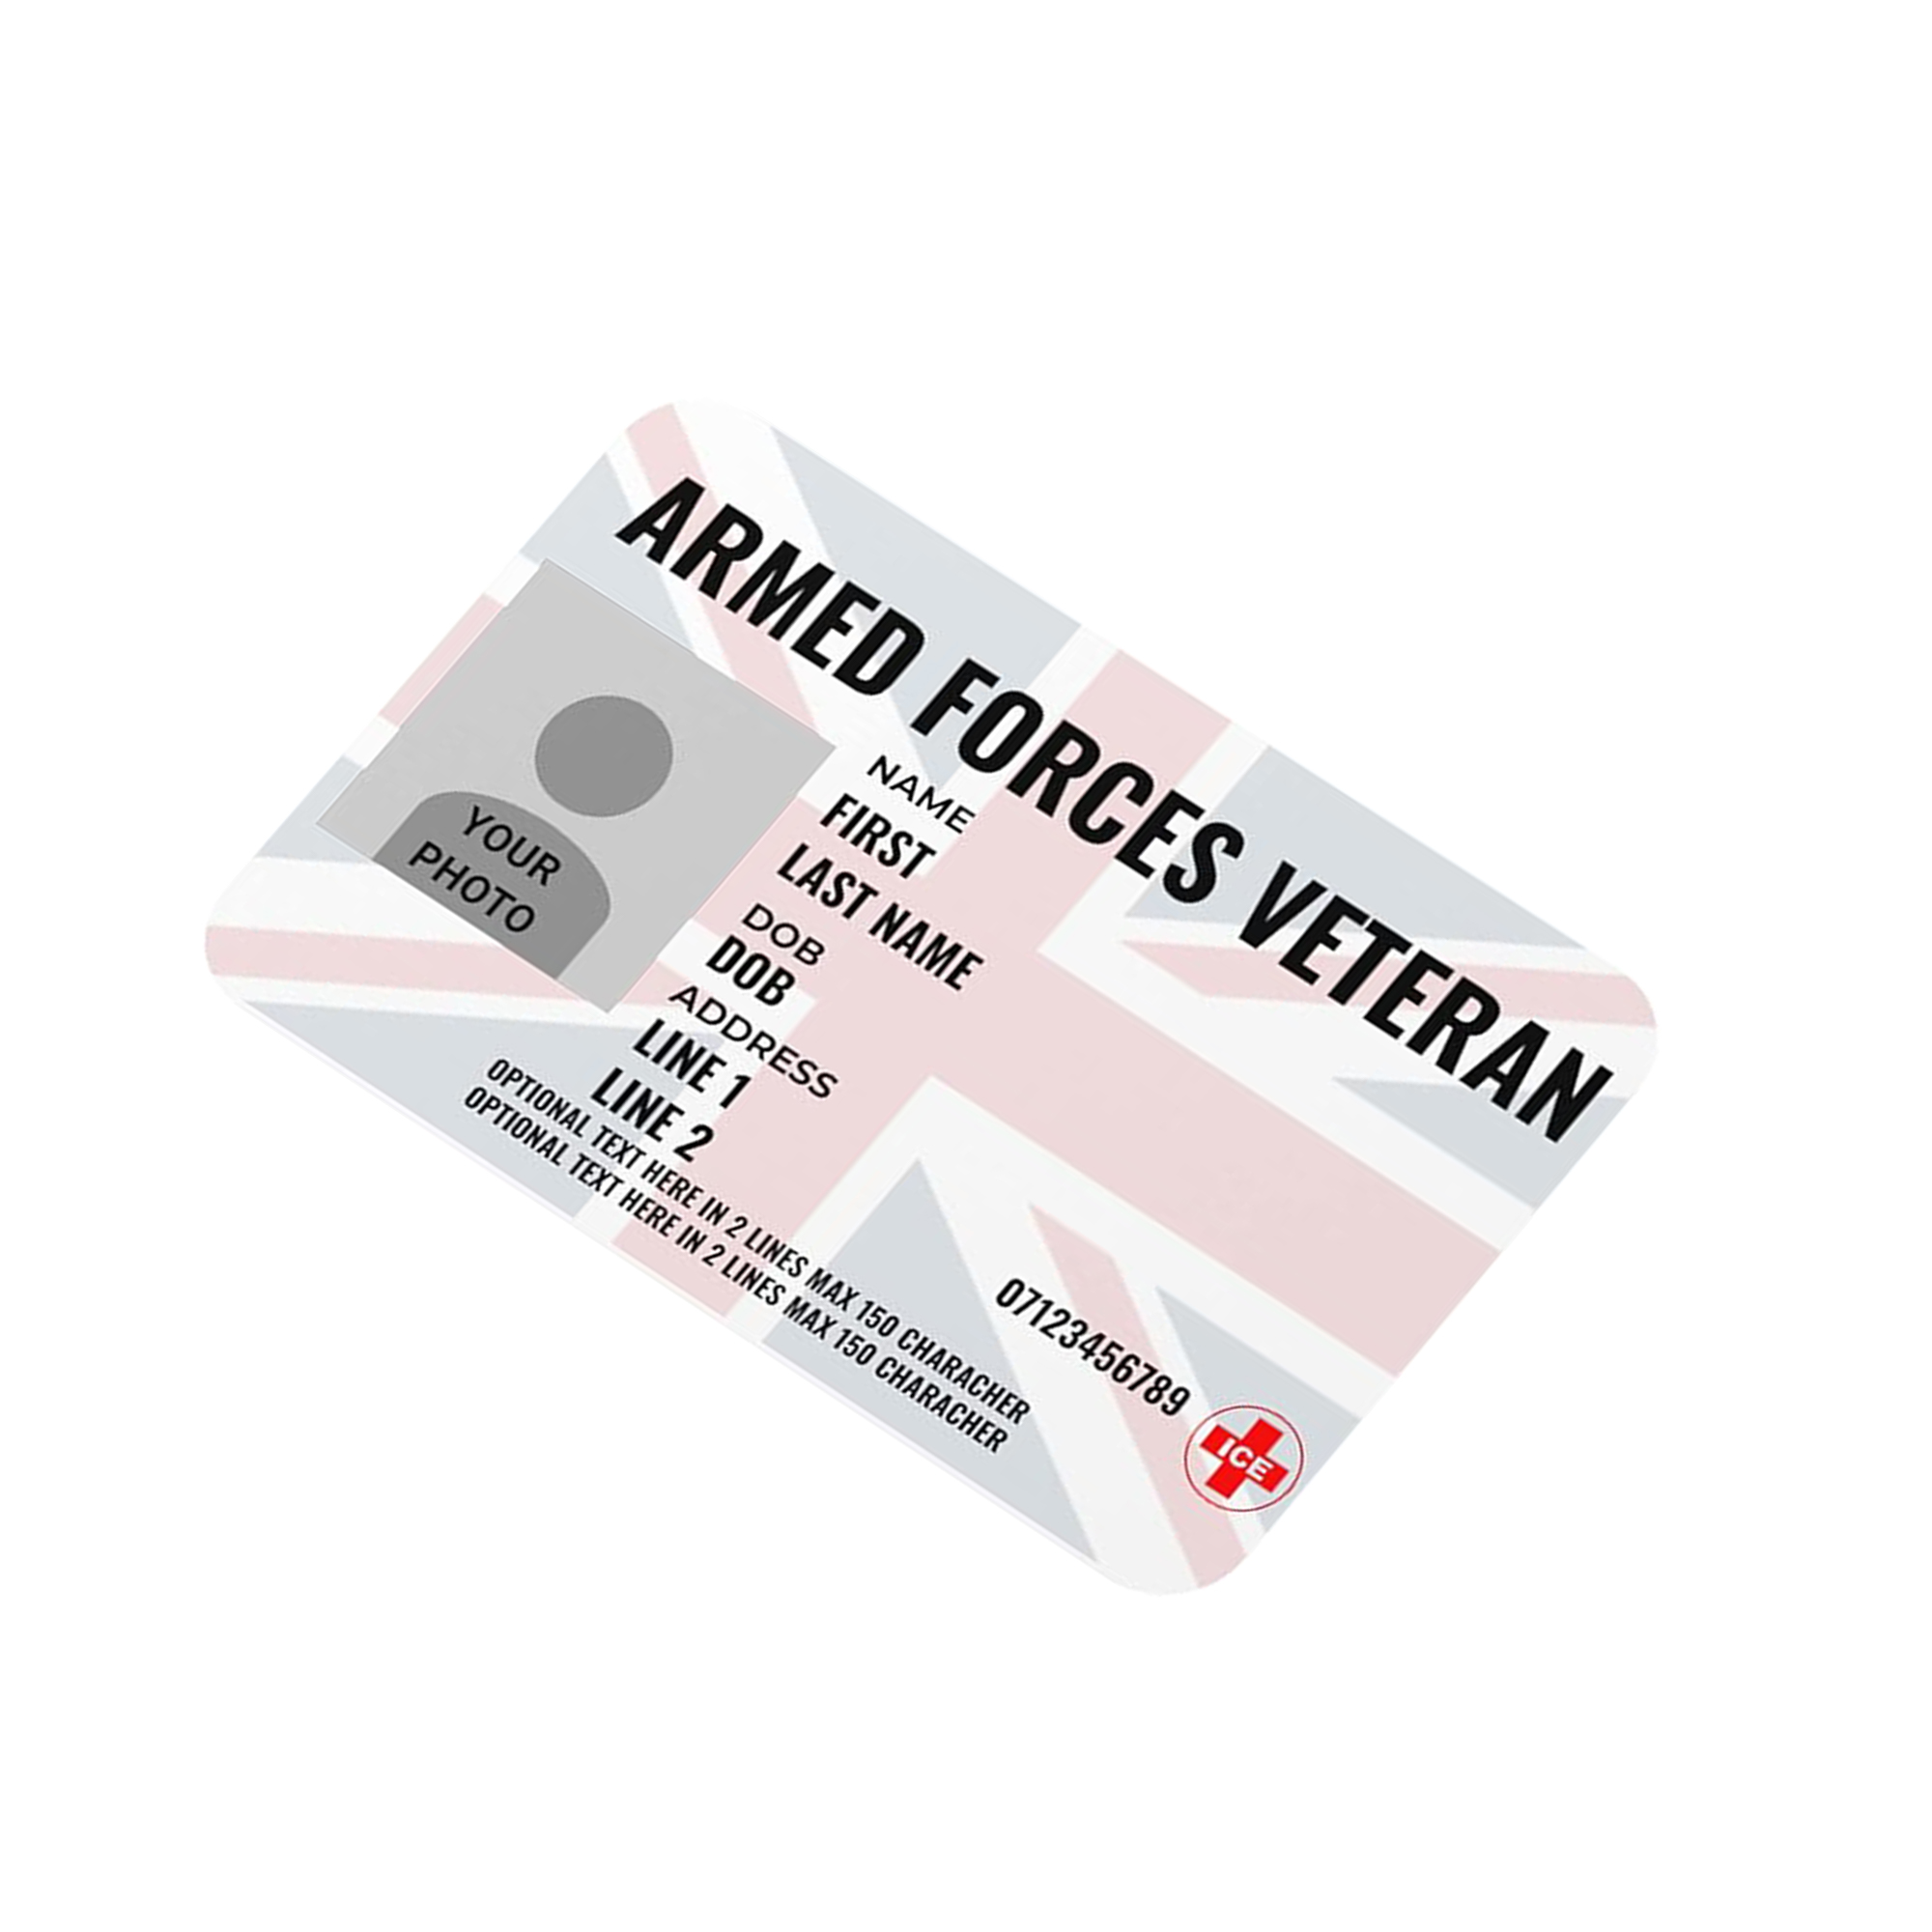 Armed Forces Veteran ID